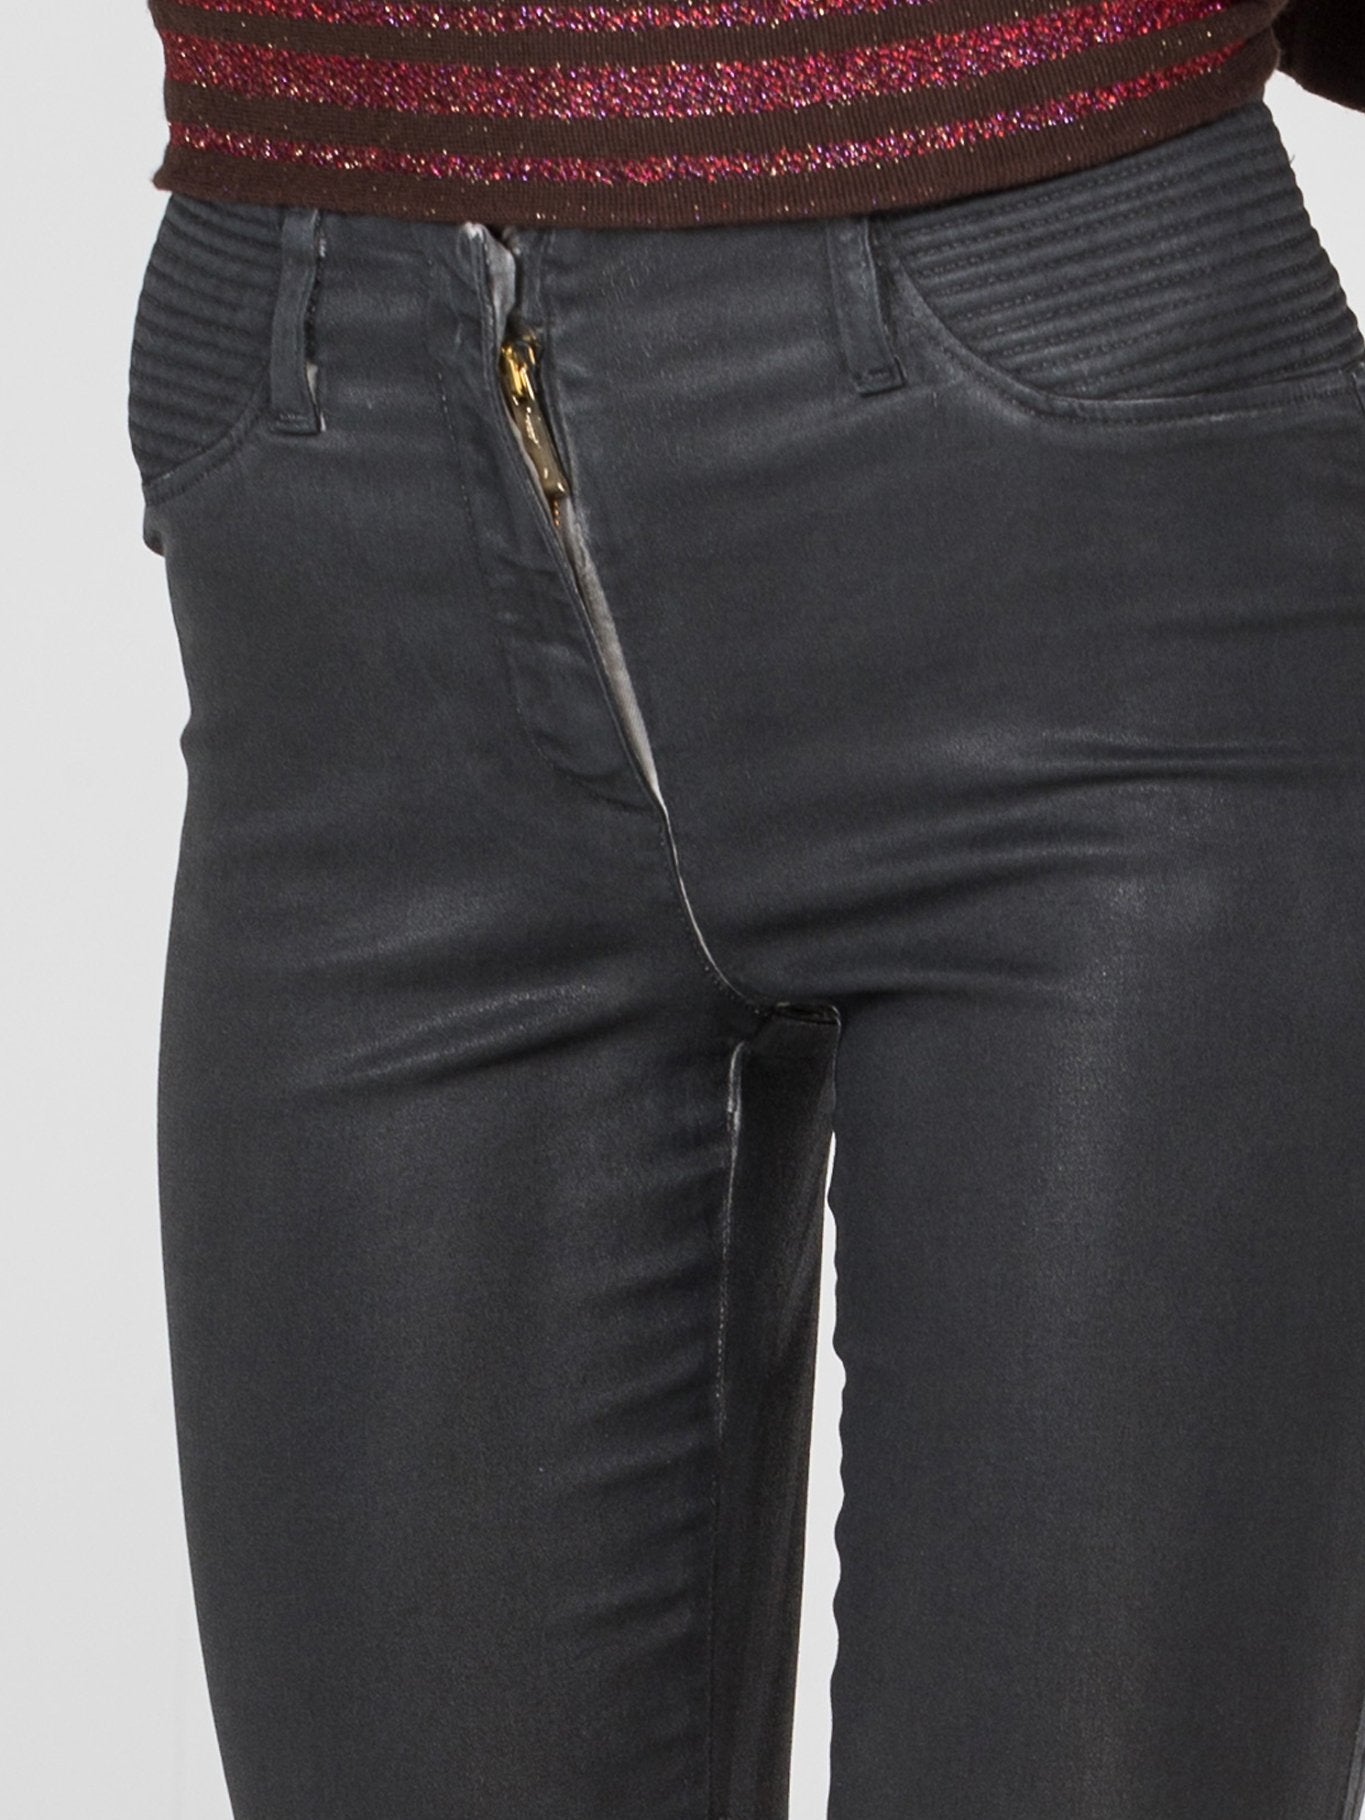 Black Skinny Zipper Pants